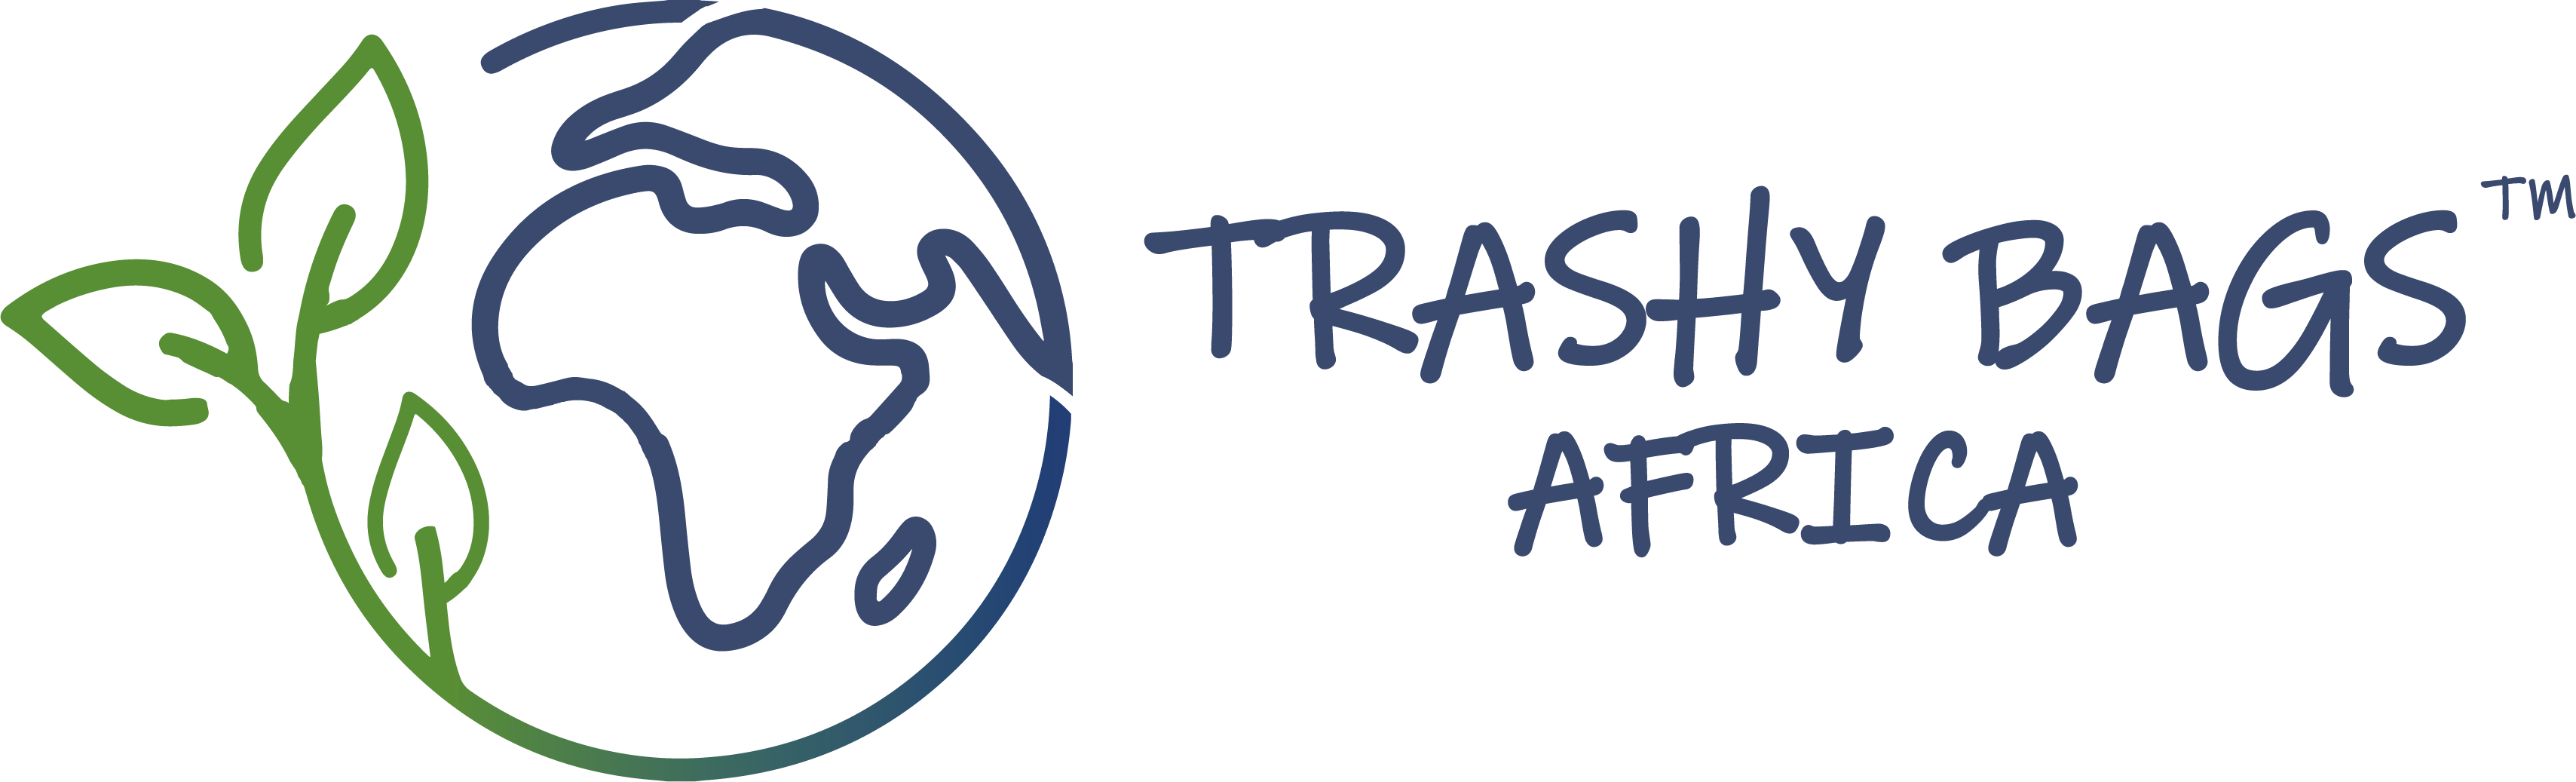 Trashy Bags Africa